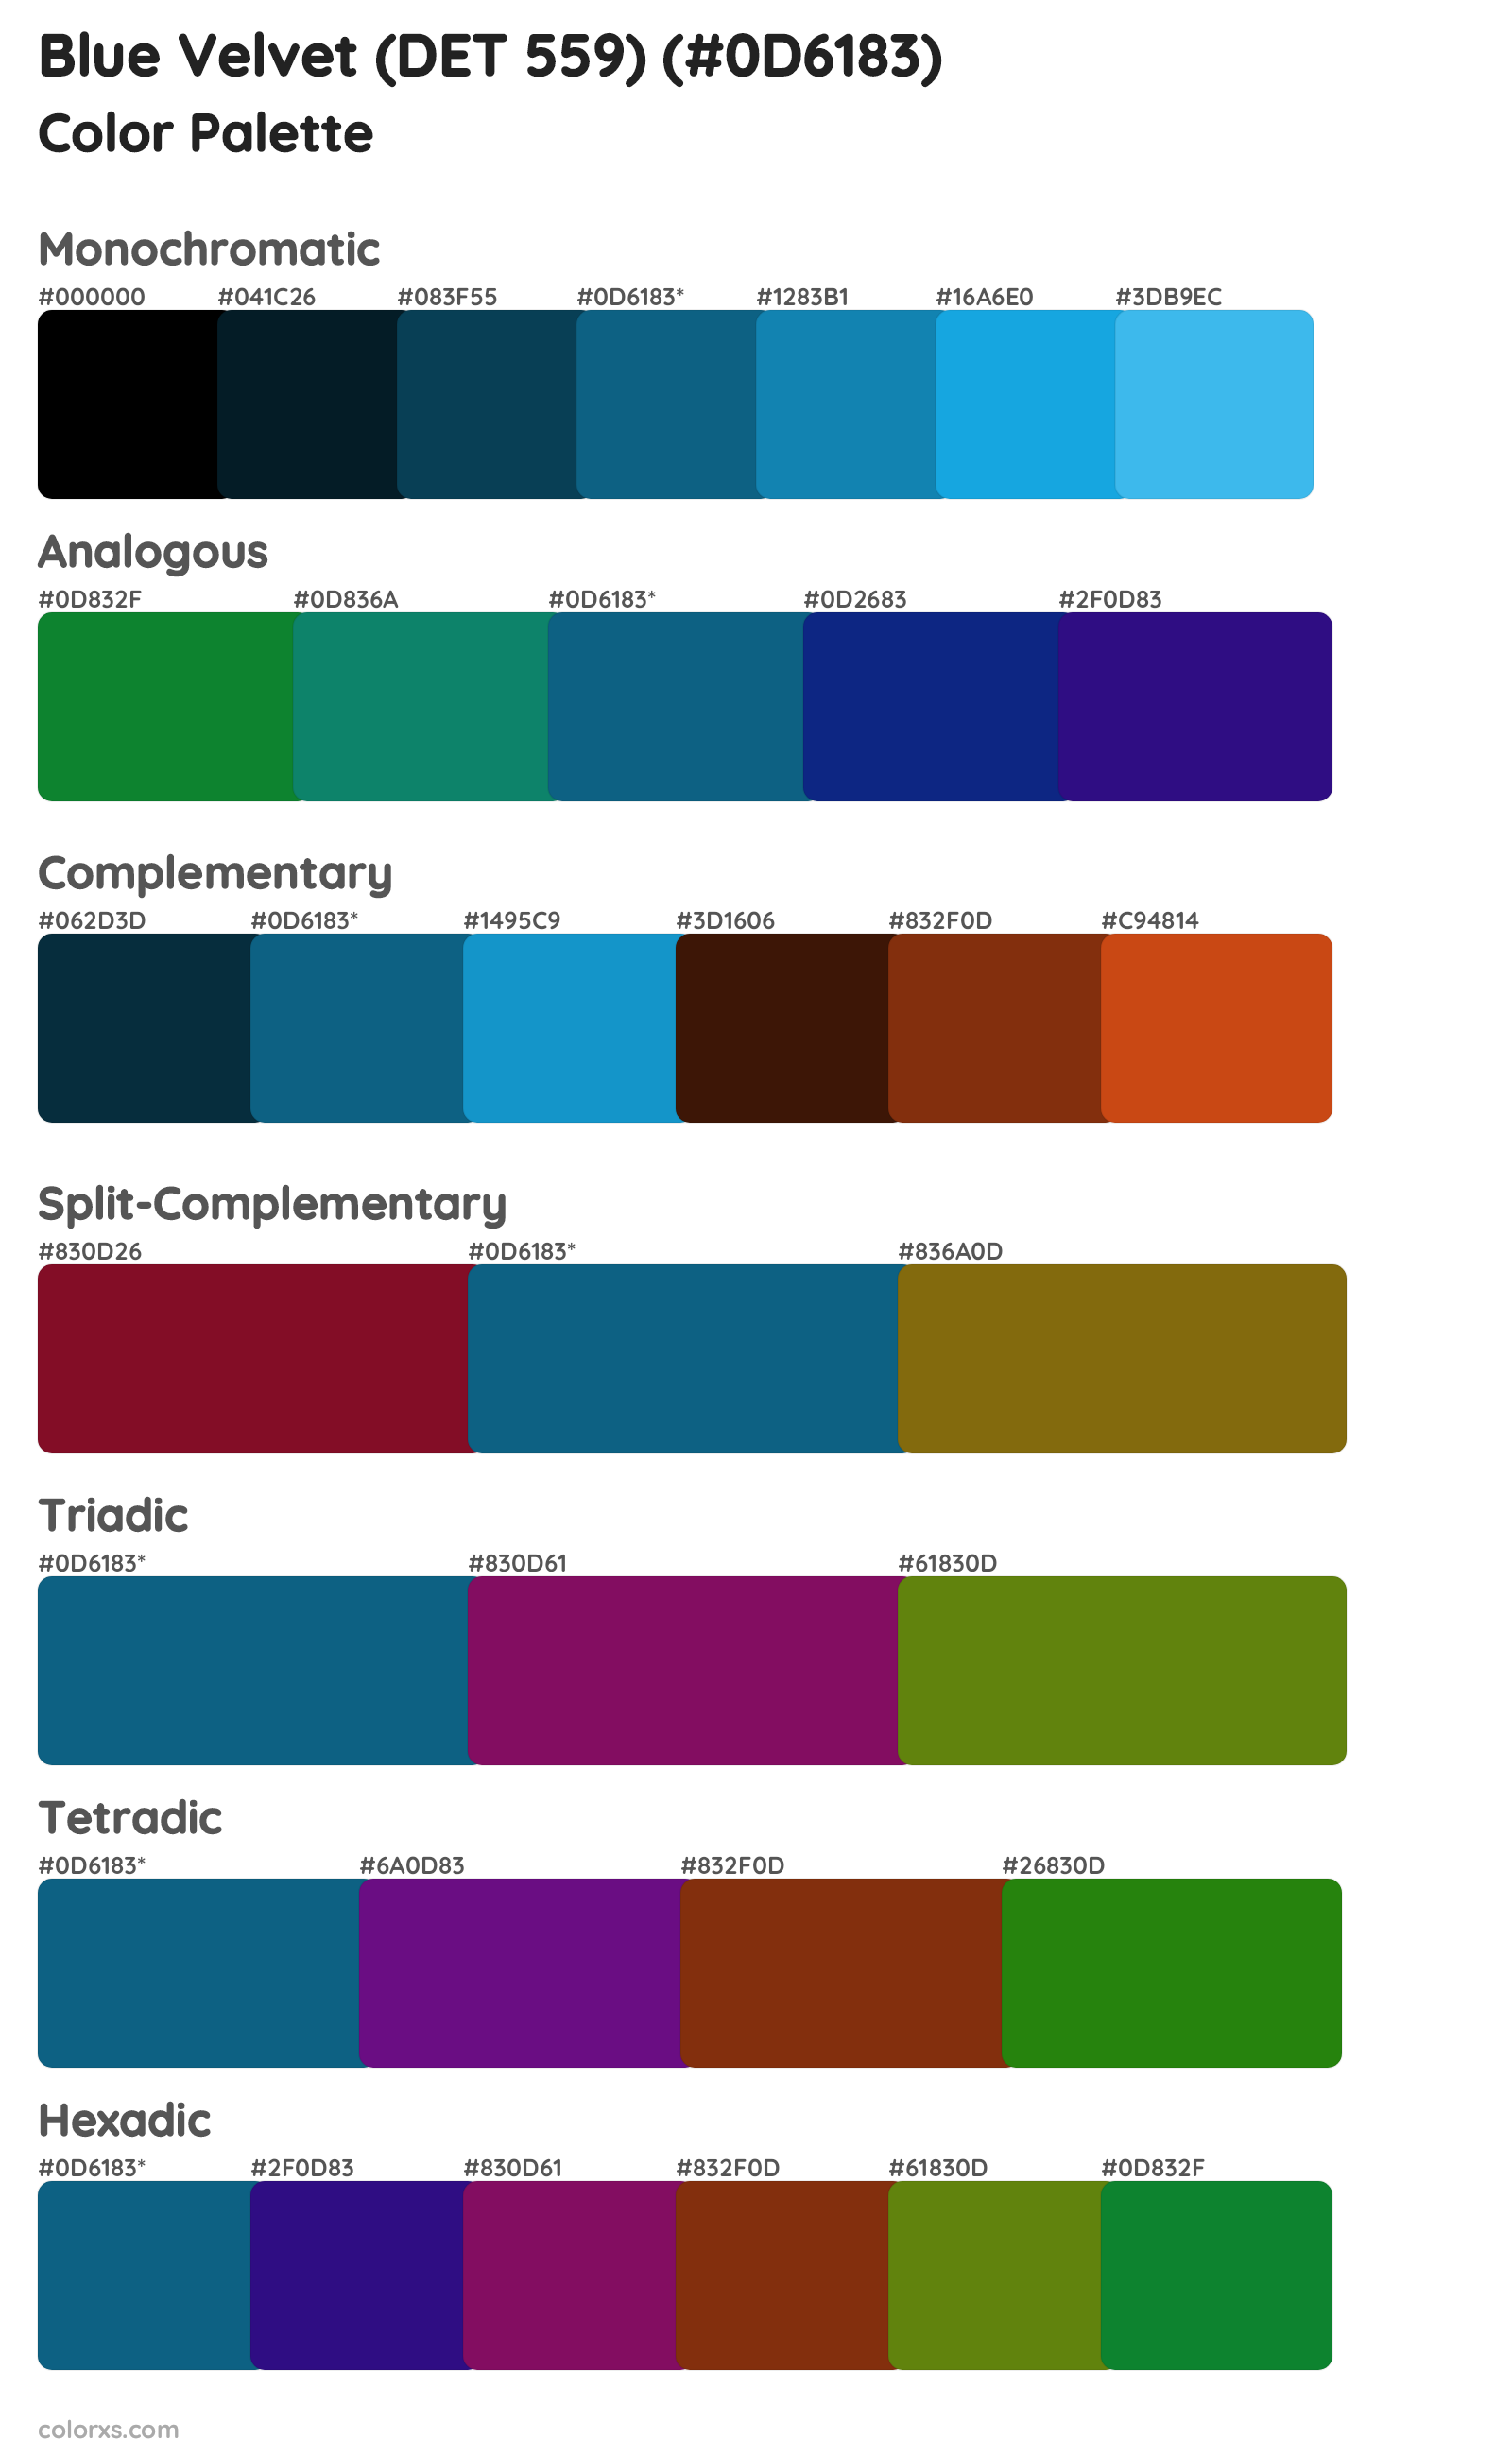 Blue Velvet (DET 559) Color Scheme Palettes